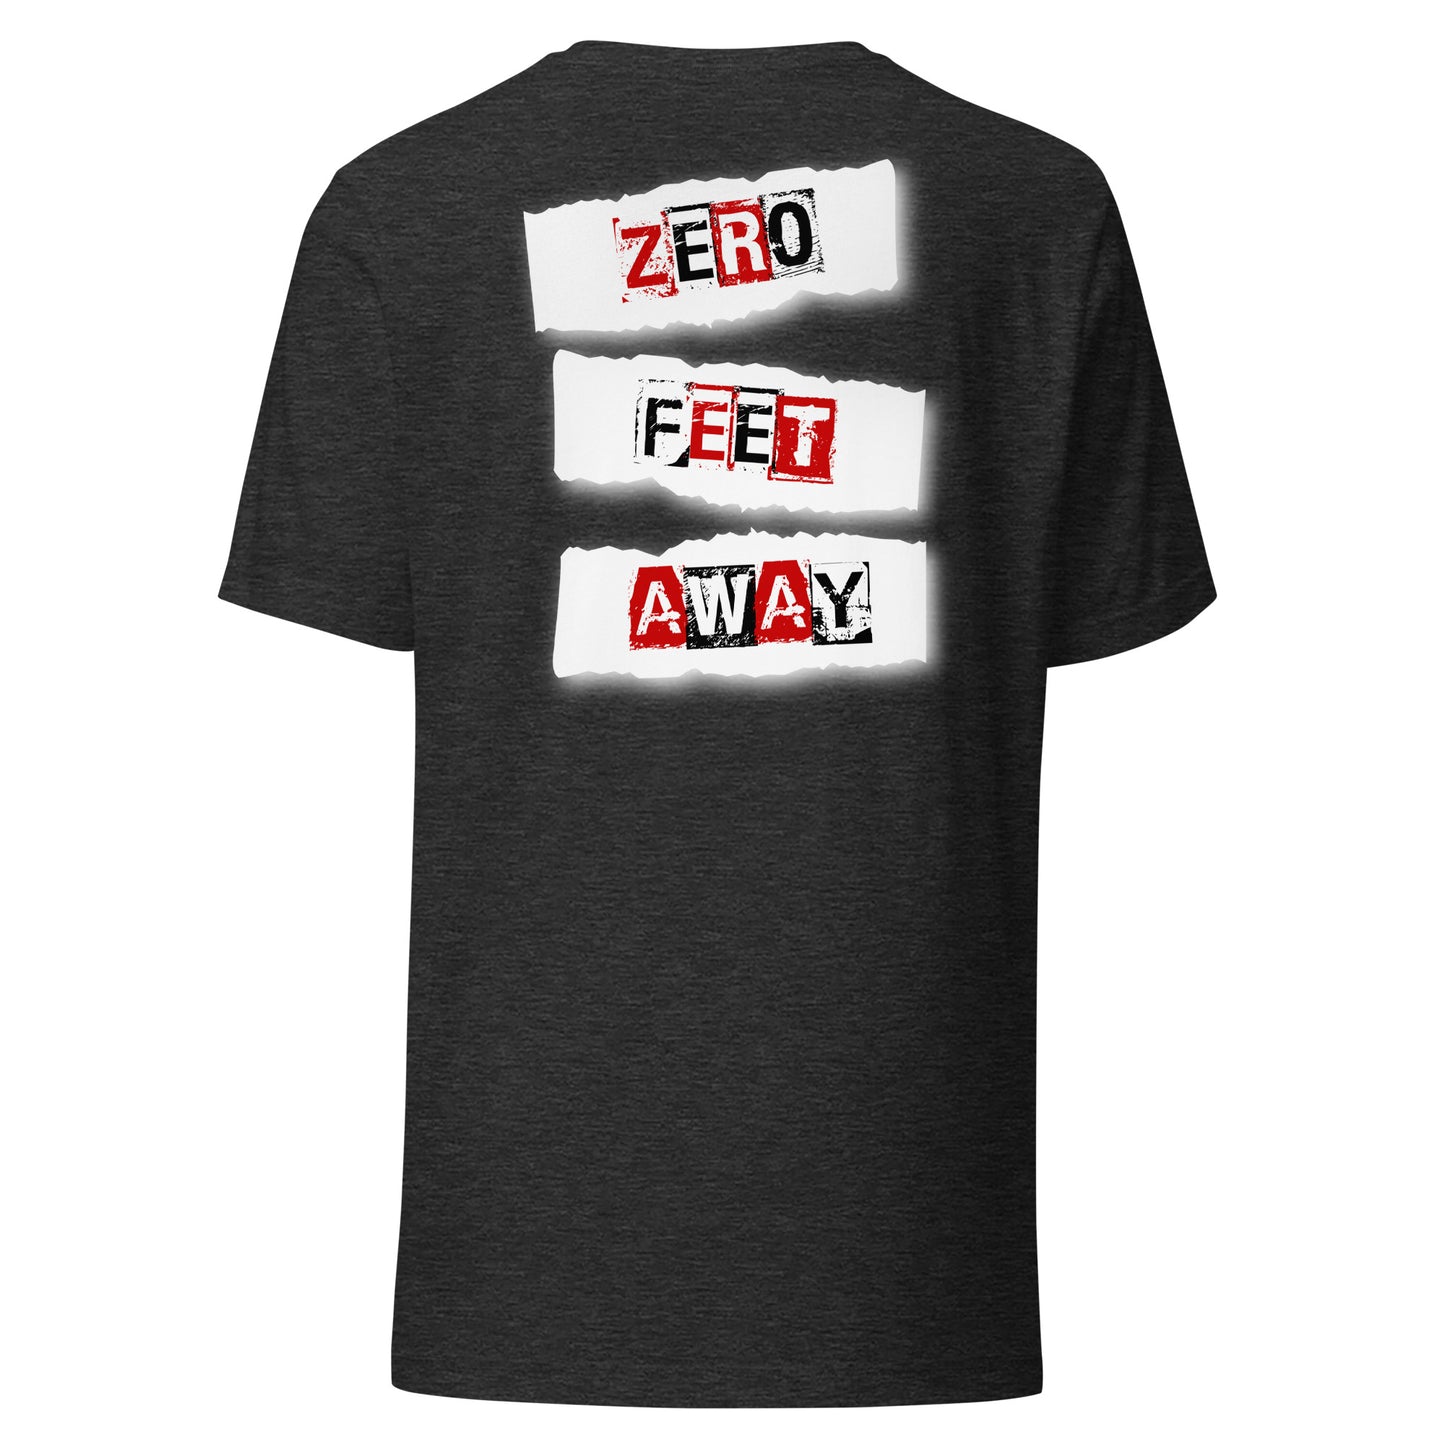 Zero Feet Away - Unisex t-shirt